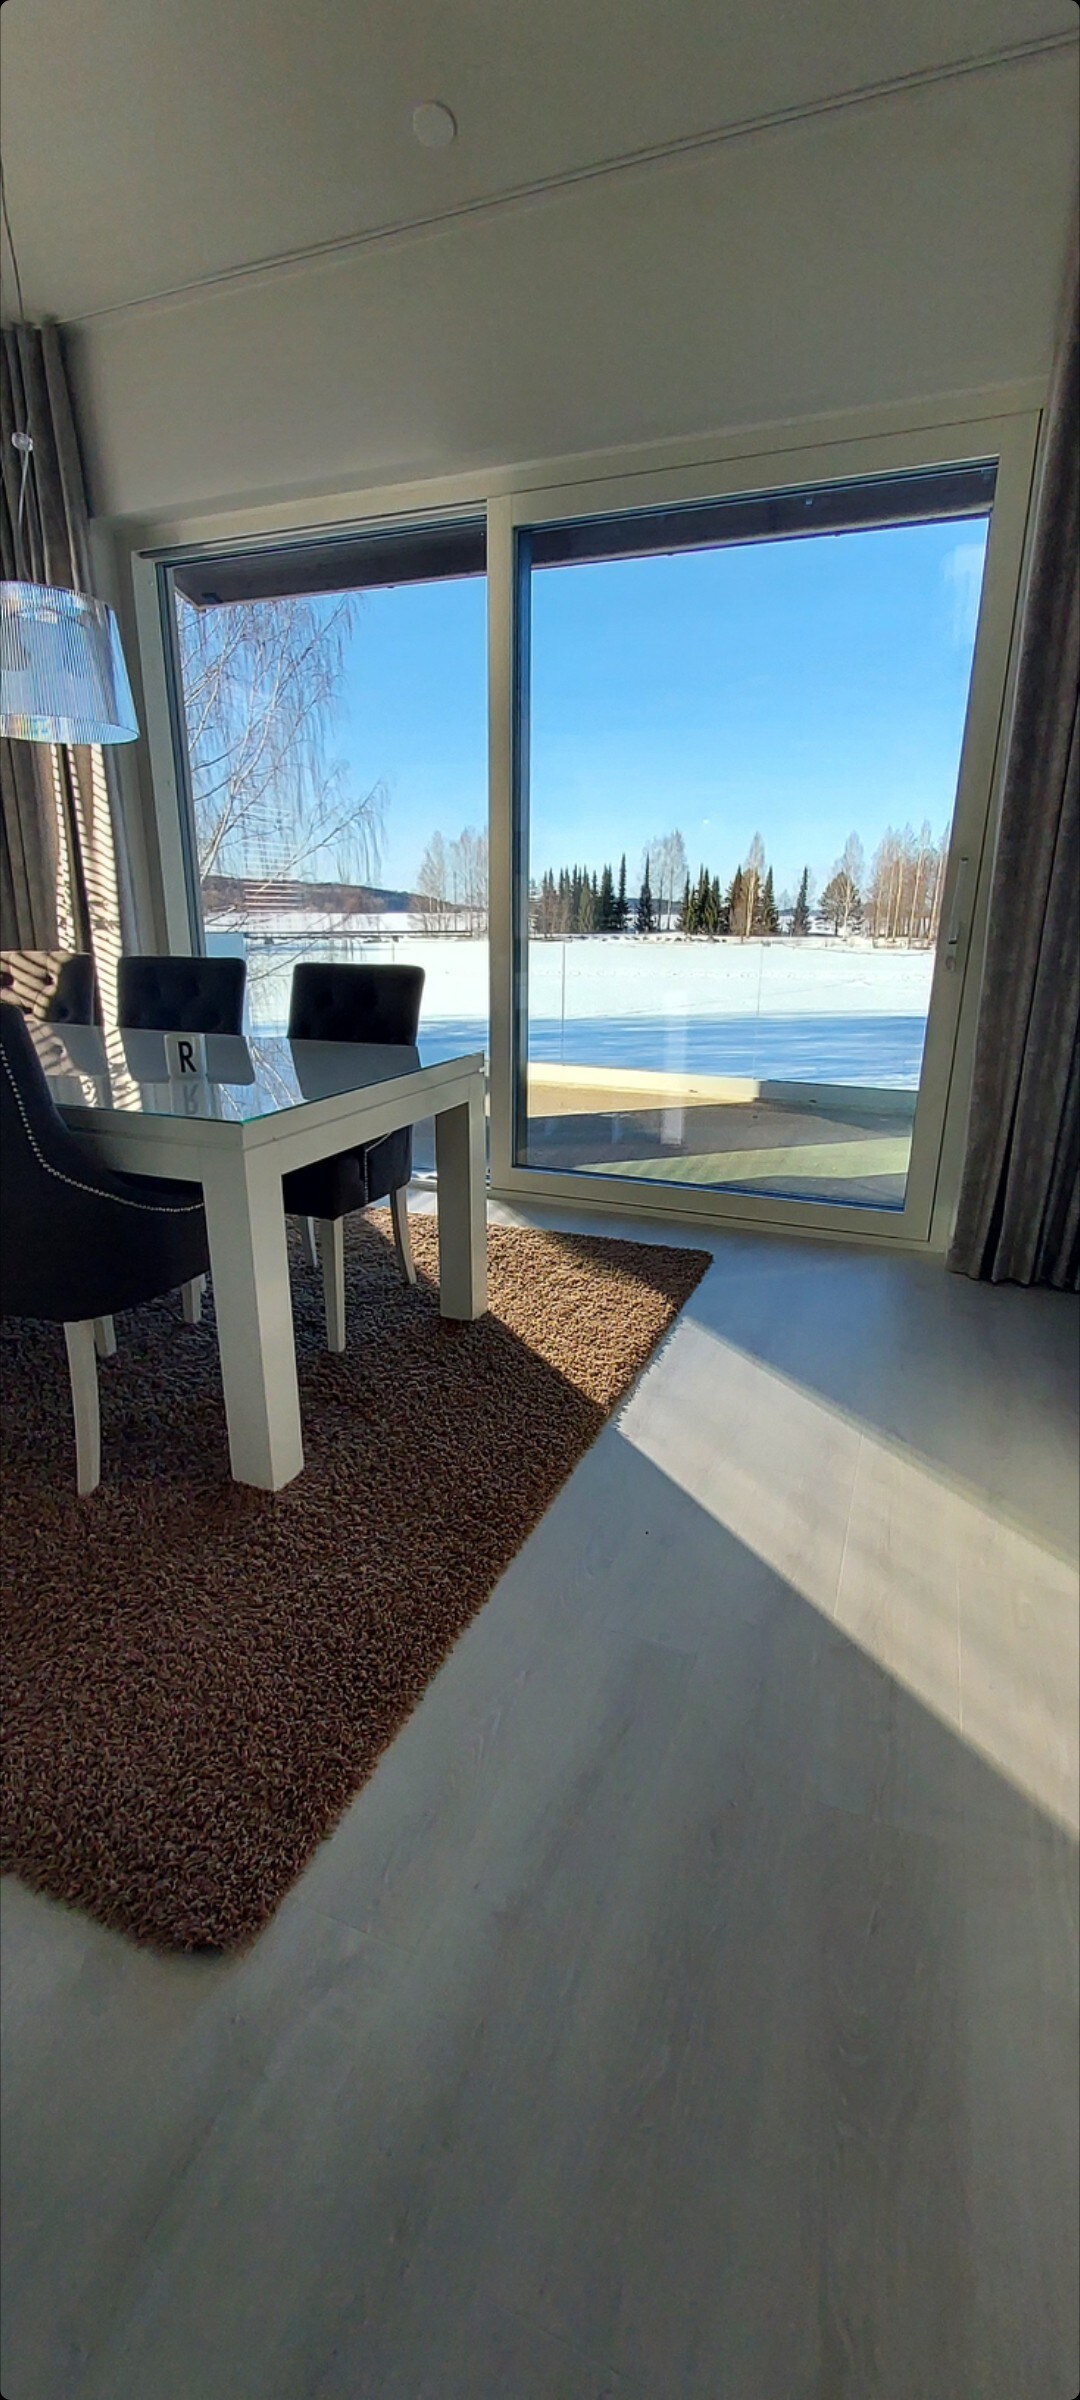 Vesijärvi湖畔的华丽公寓